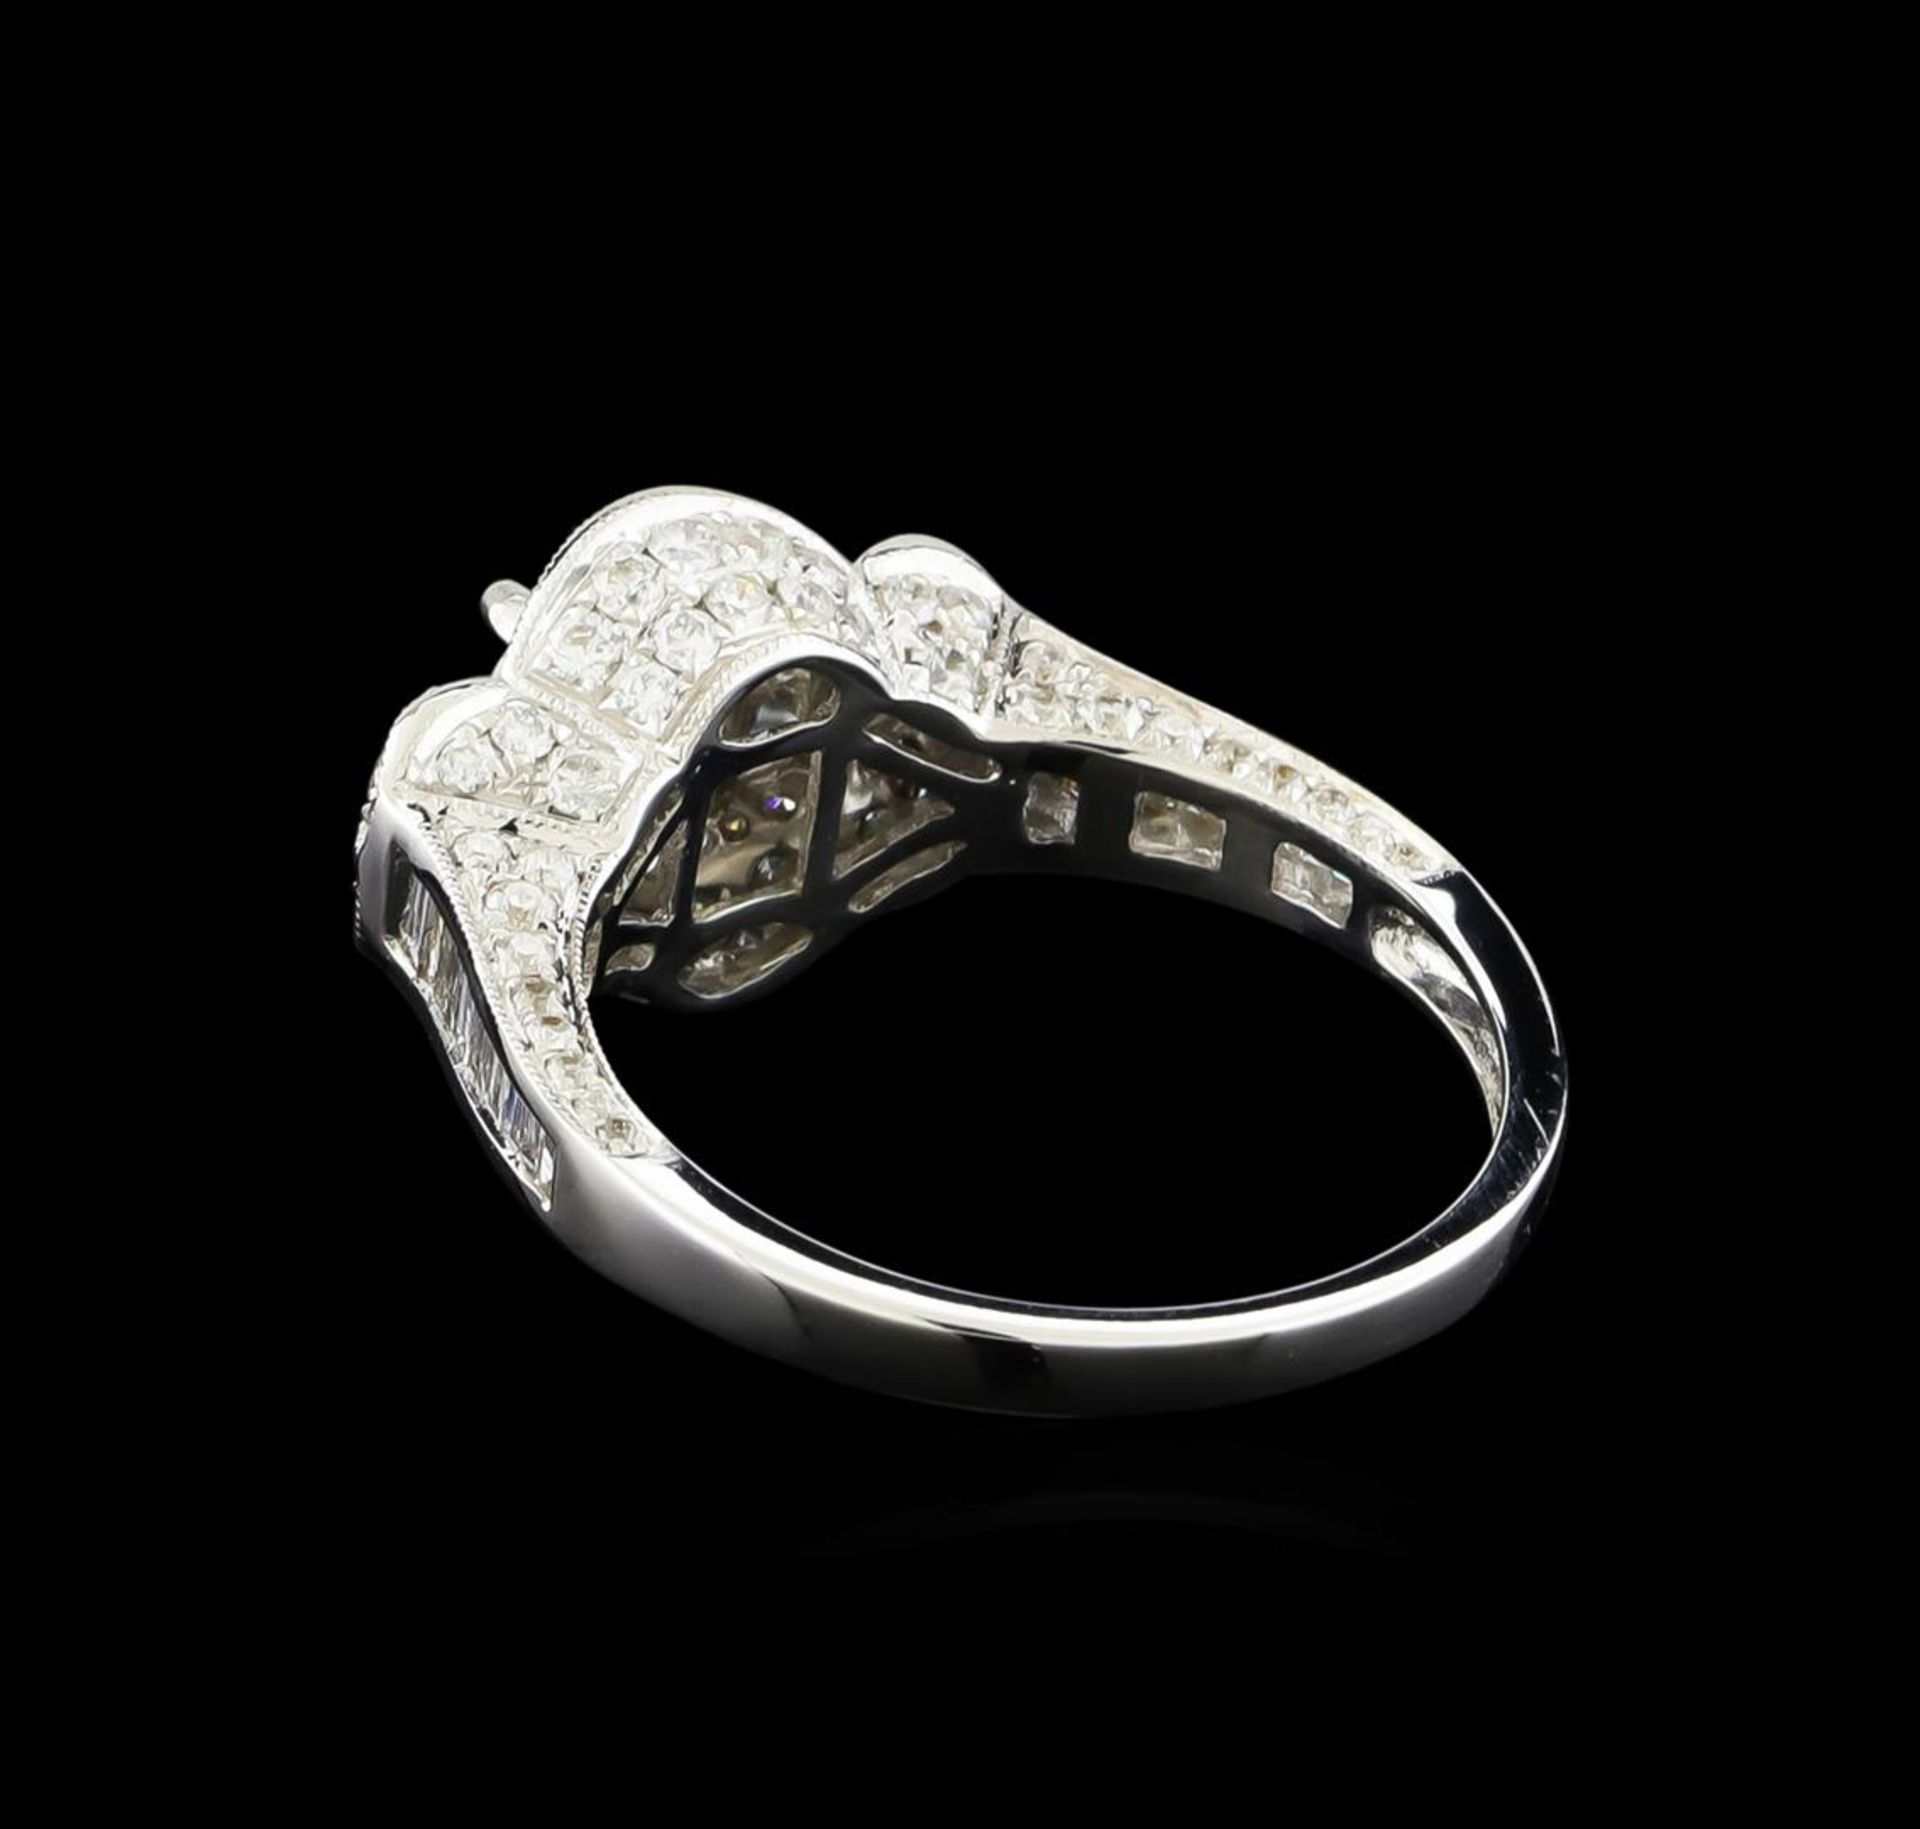 14KT White Gold 1.72 ctw Diamond Ring - Image 3 of 4